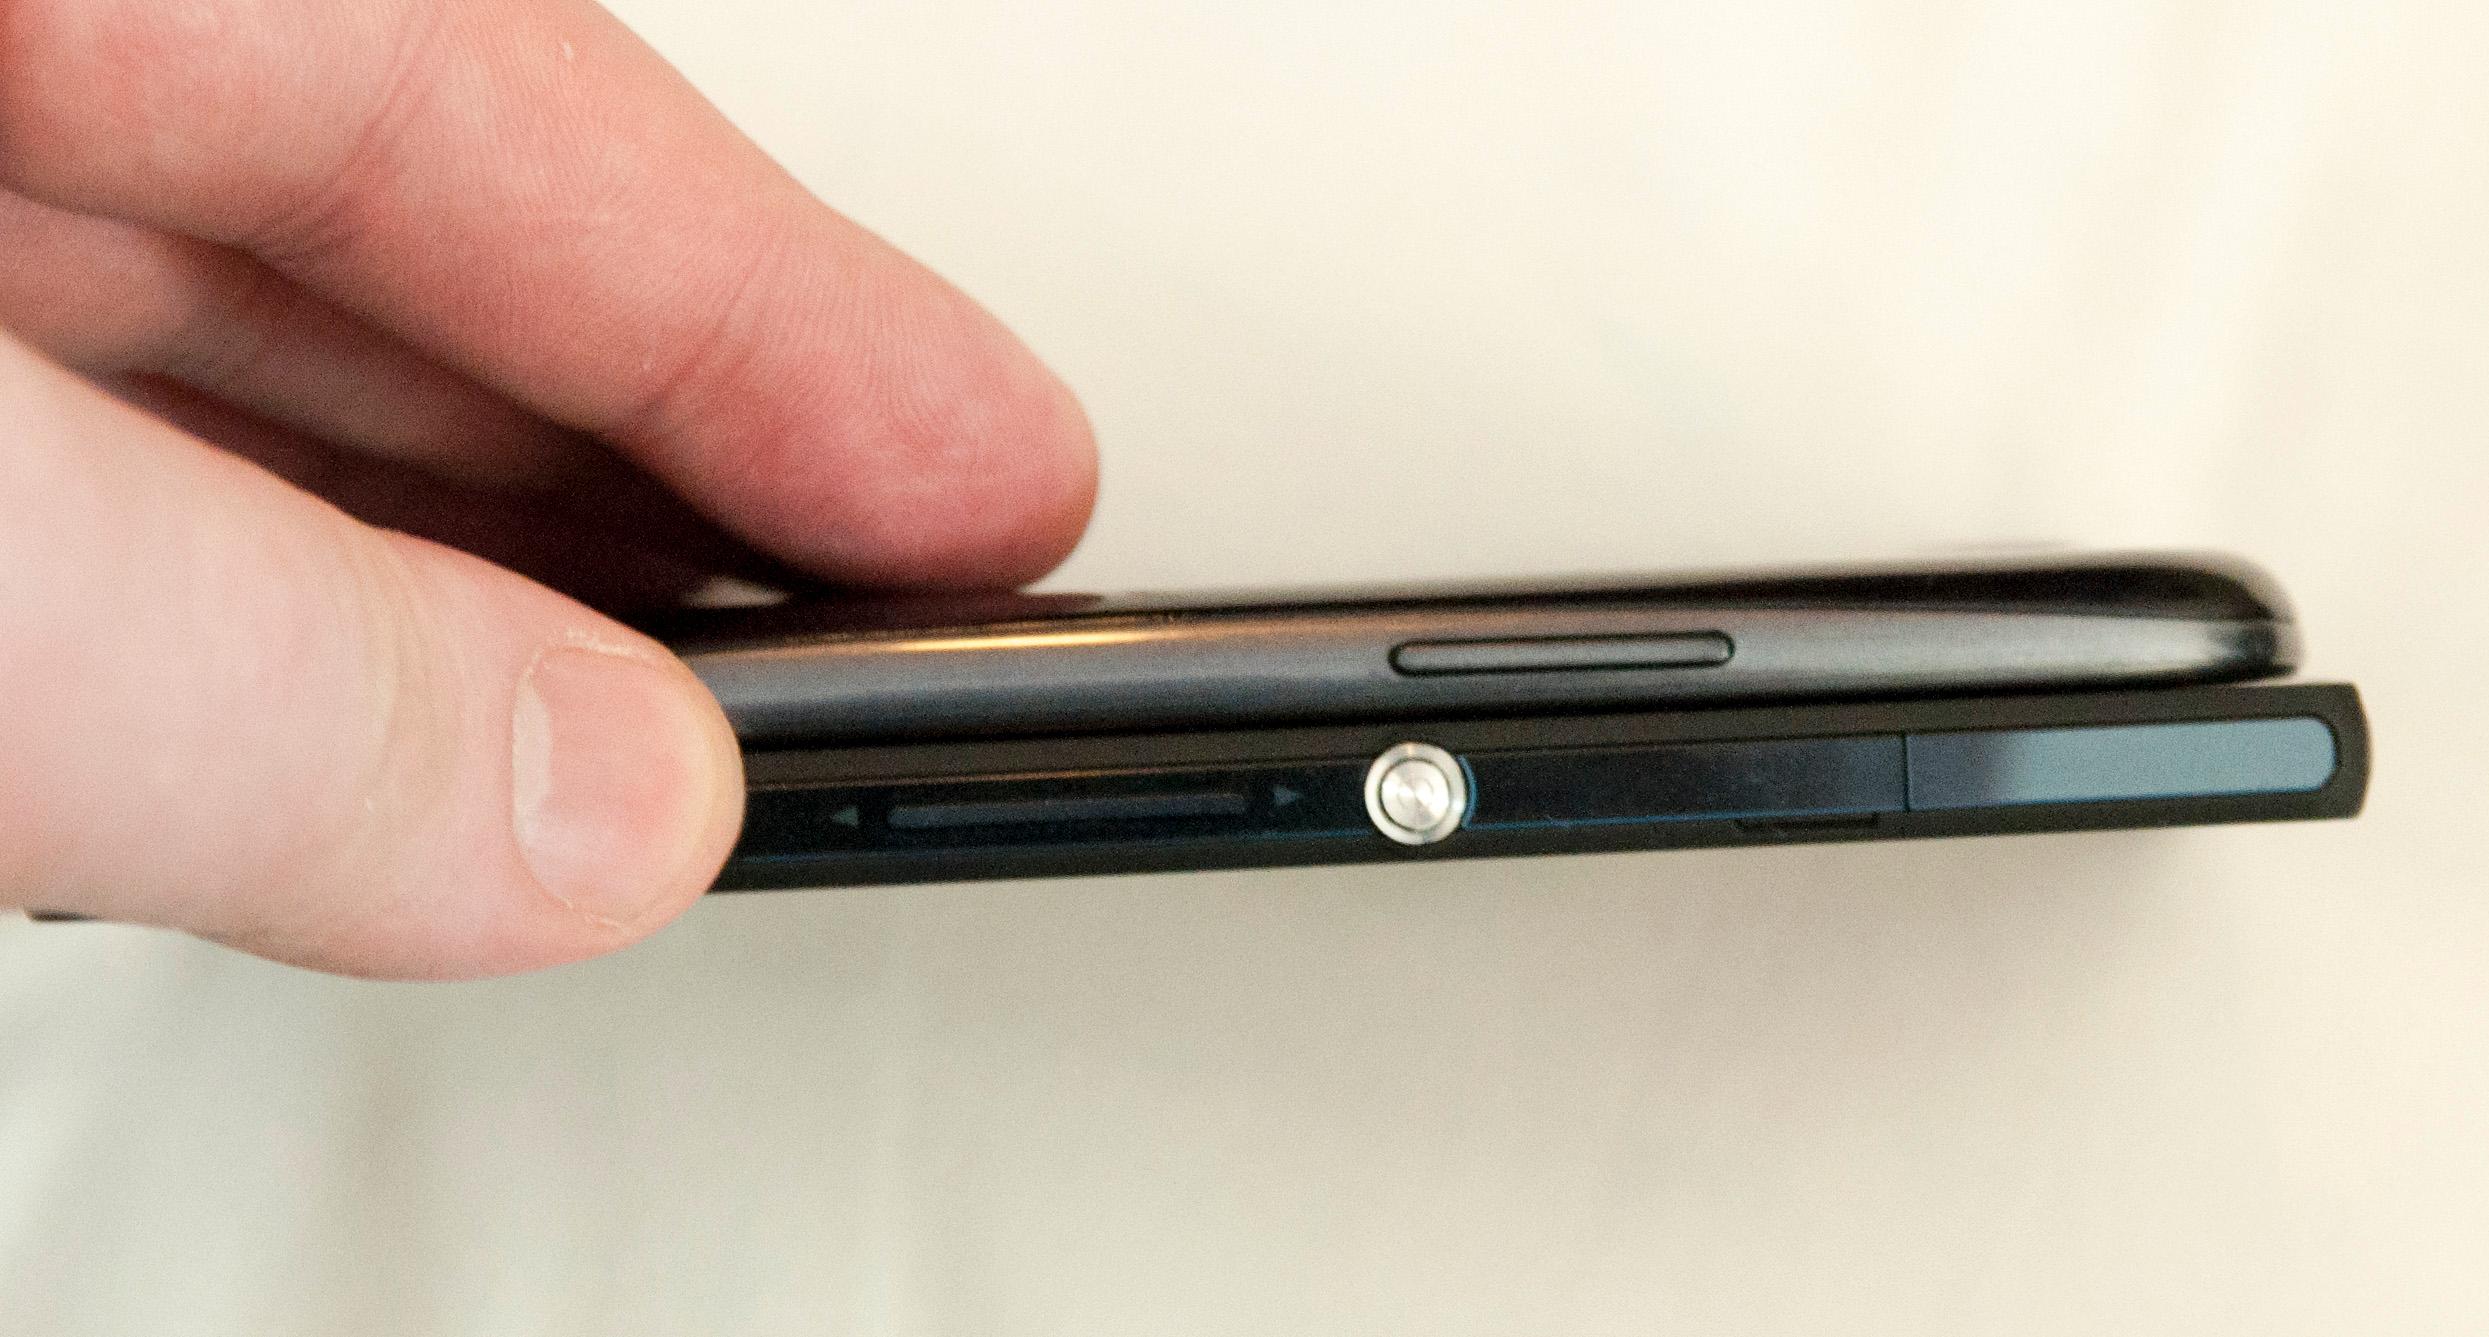 Xperia Z er en svært tynn mobiltelefon.Foto: Finn Jarle Kvalheim, Amobil.no